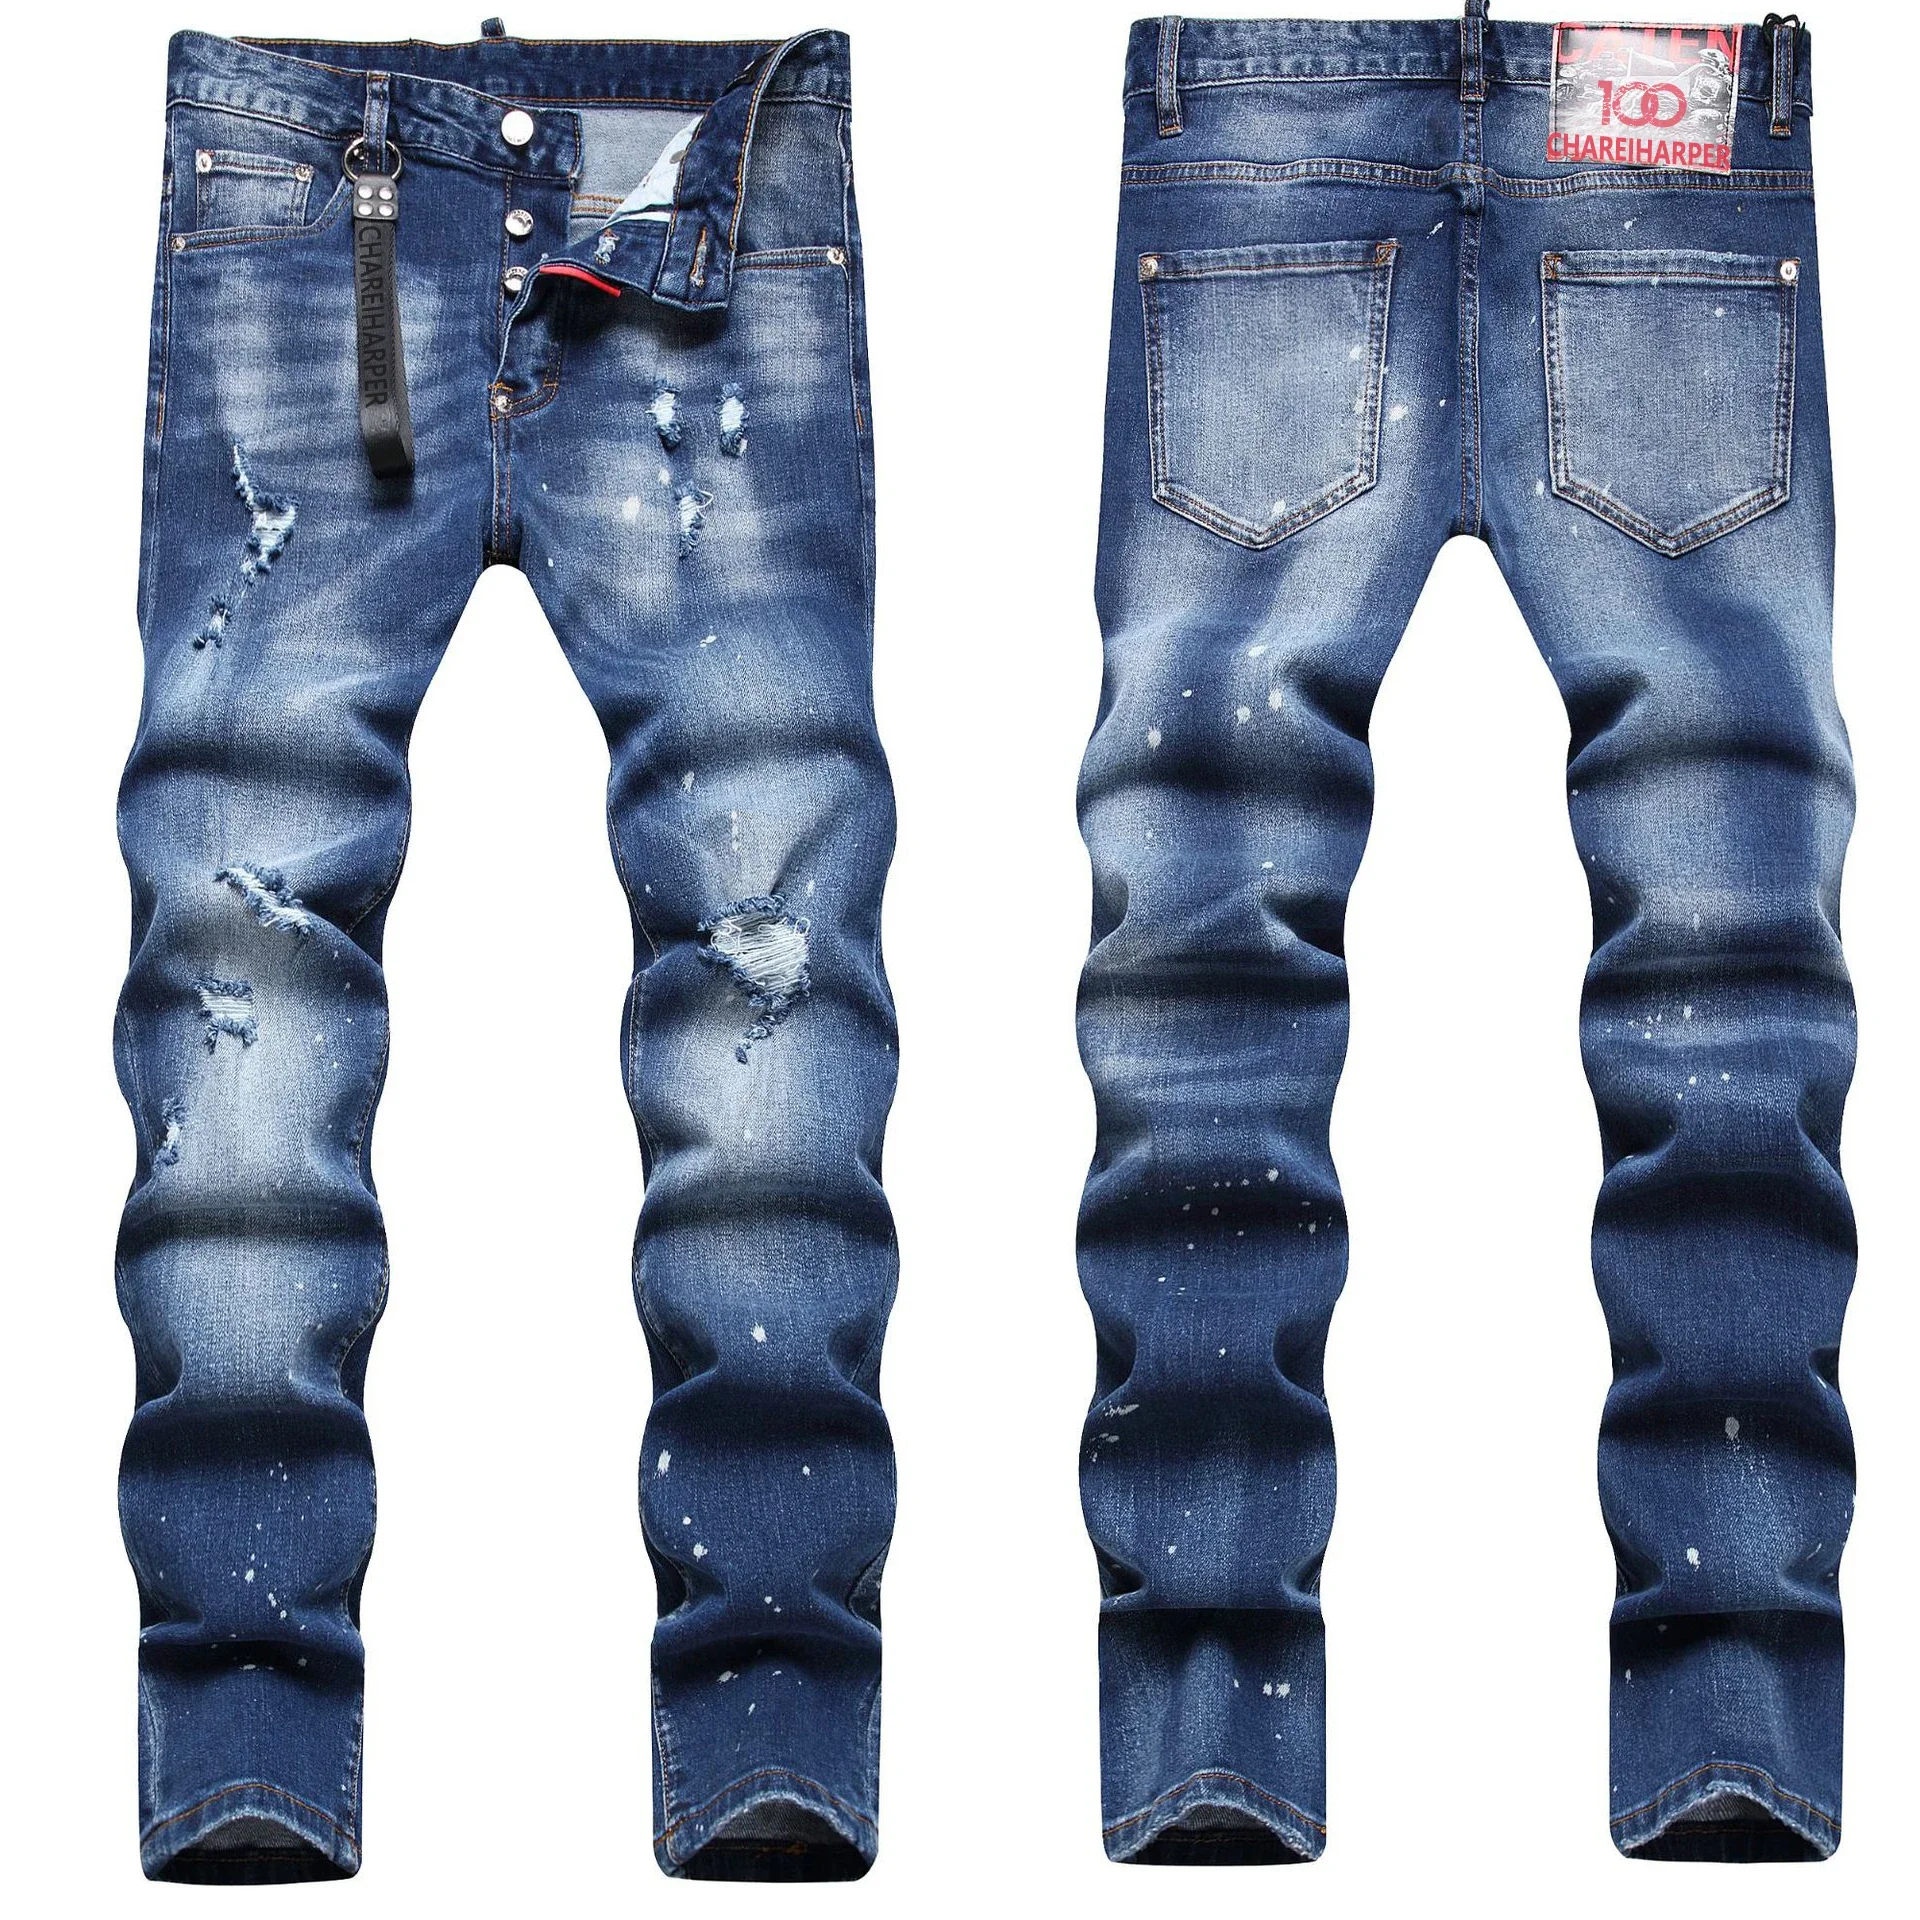 

chareiharper dsq1037 plus size Men's jeans ripped fashion hanging adornment trend paint slim slim feet mid-waist pants